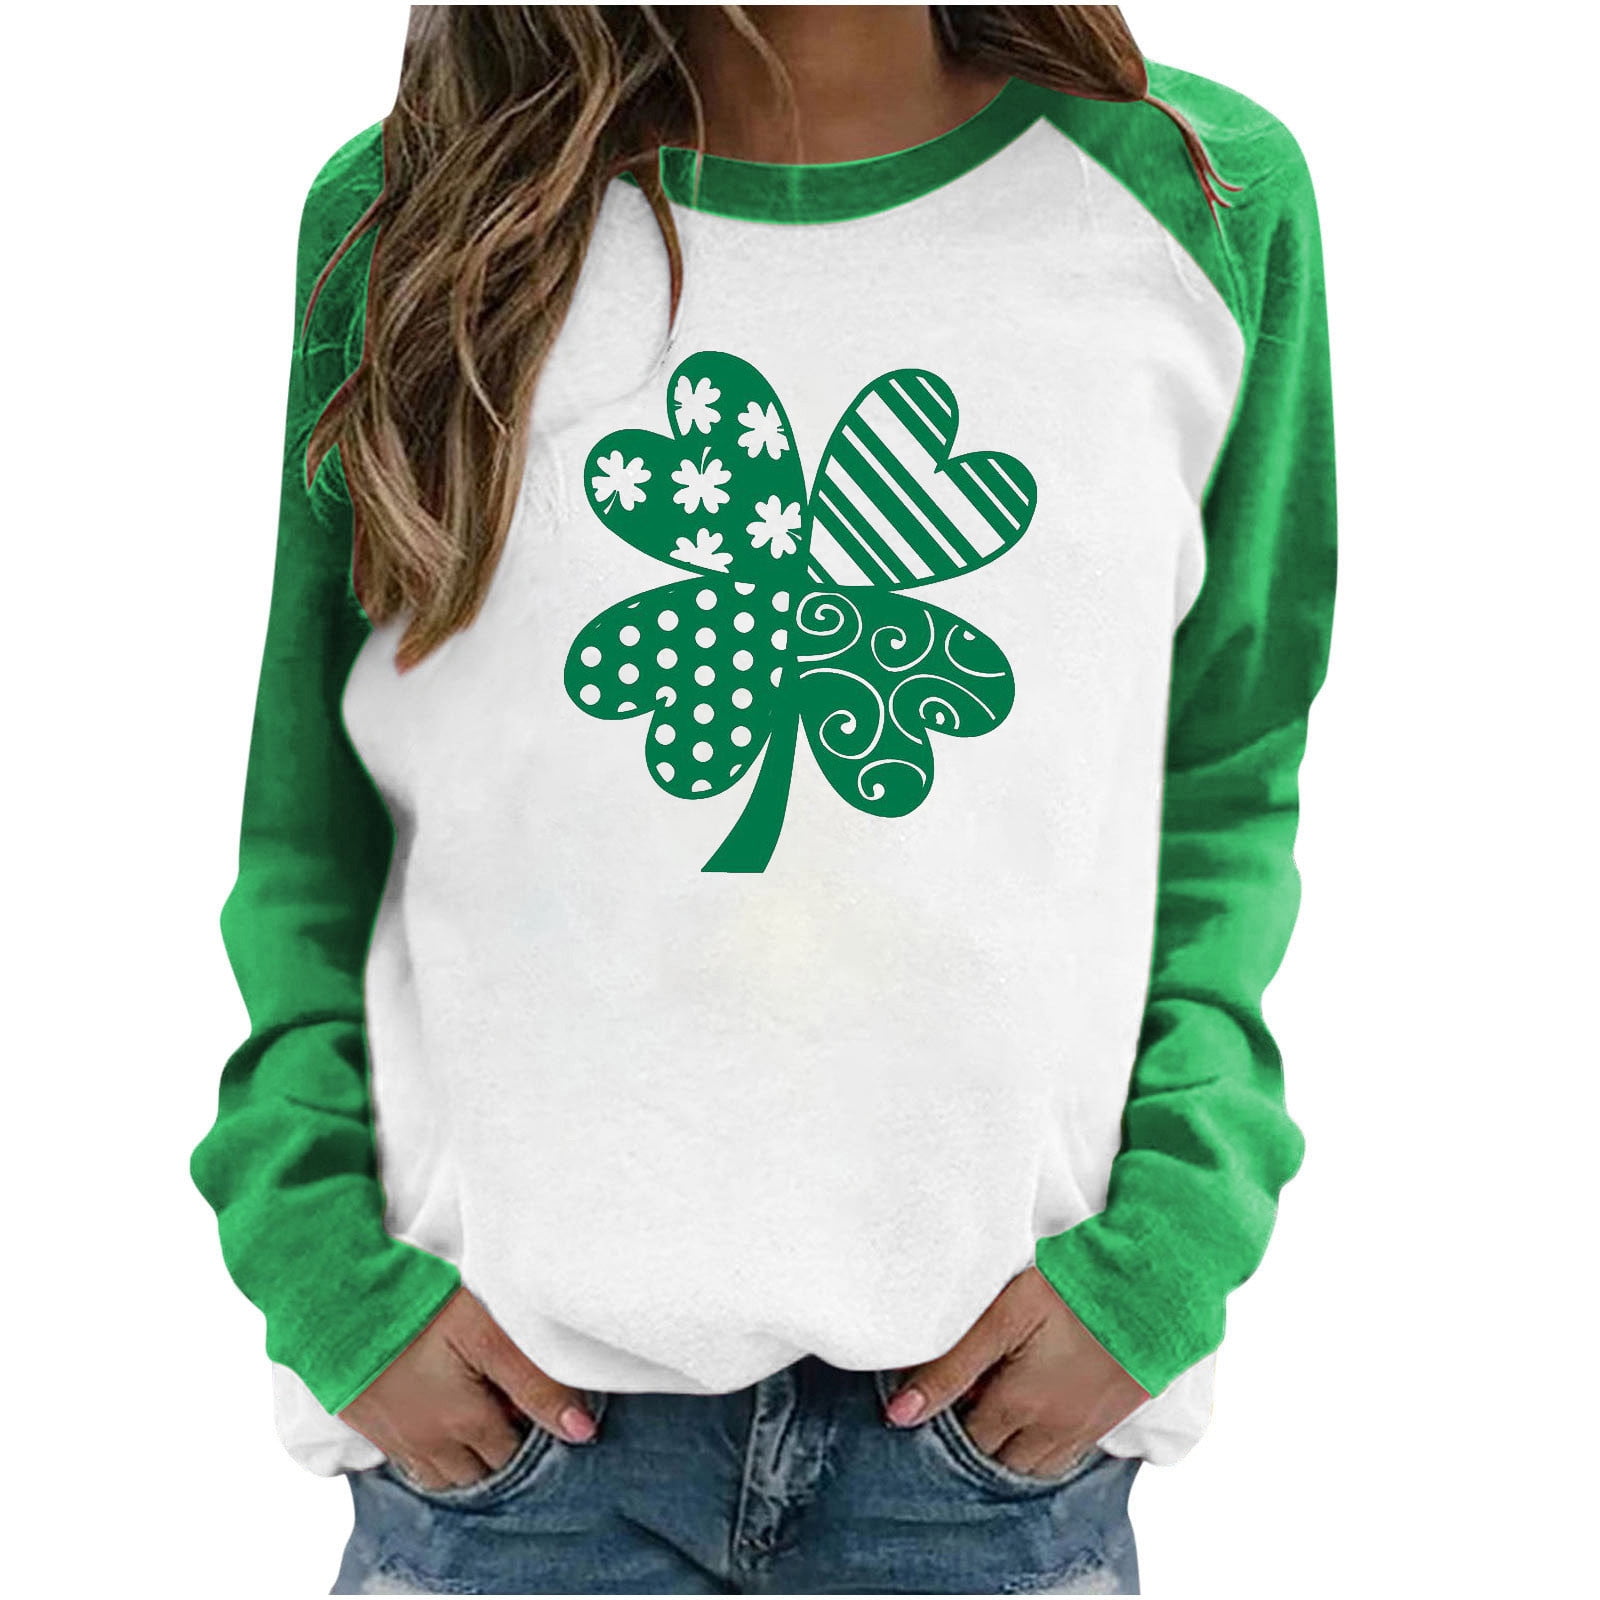 Up to 30% off, zanvin Womens St. Patrick's Day Casual Sweatshirt Long  Sleeve Shirts Irish Cute Pullover Tops,Green,M 